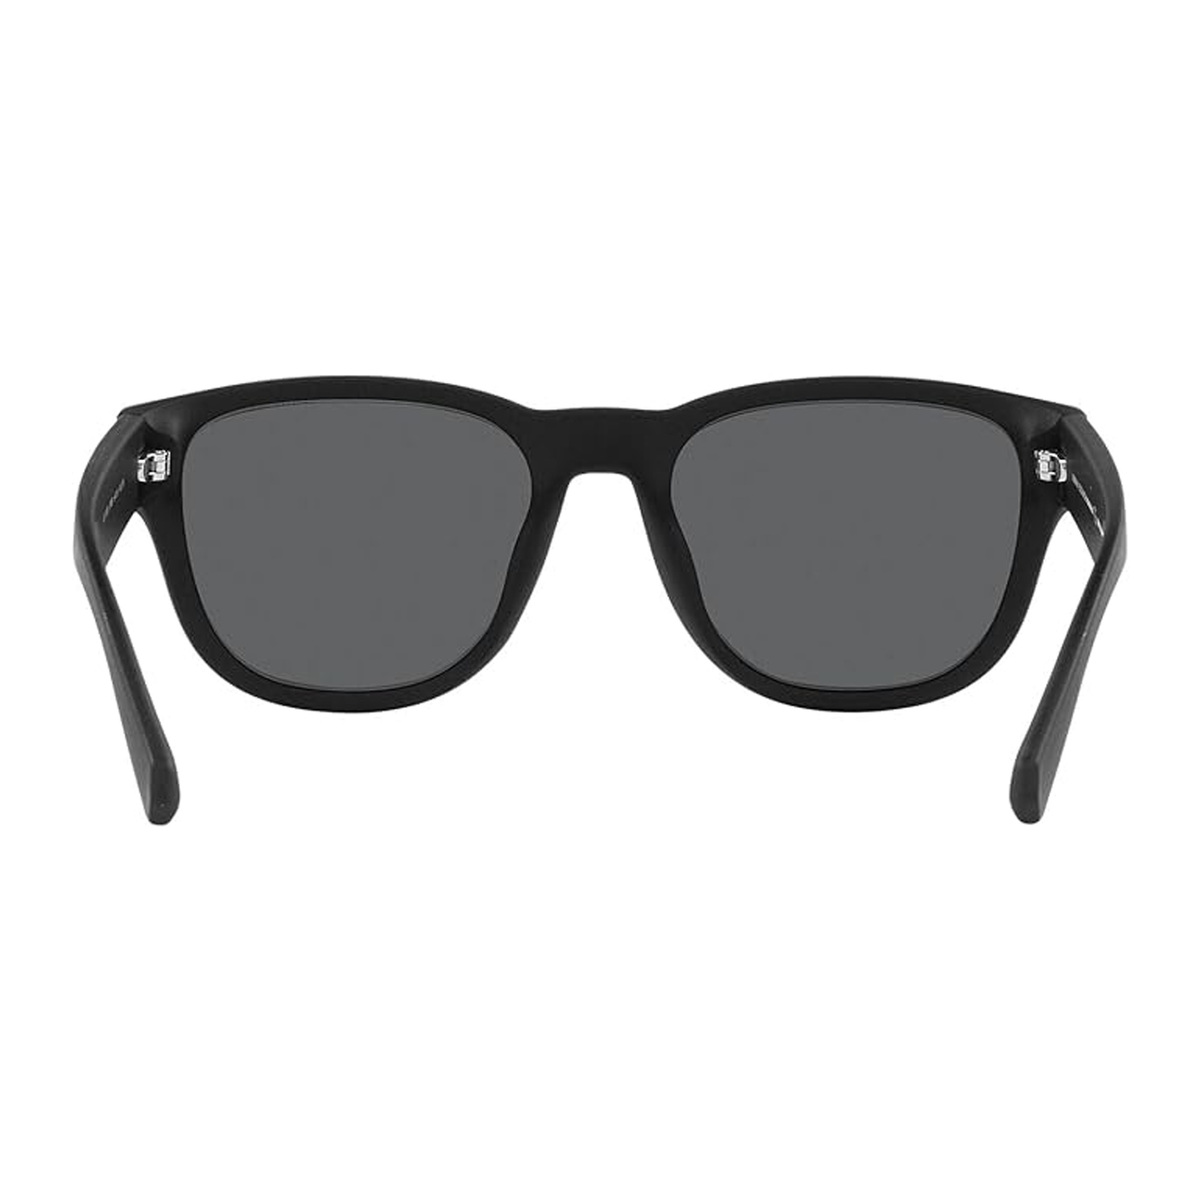 Armani Exchange Pillow Men's Sunglasses, Dark Grey, 4115 80788754